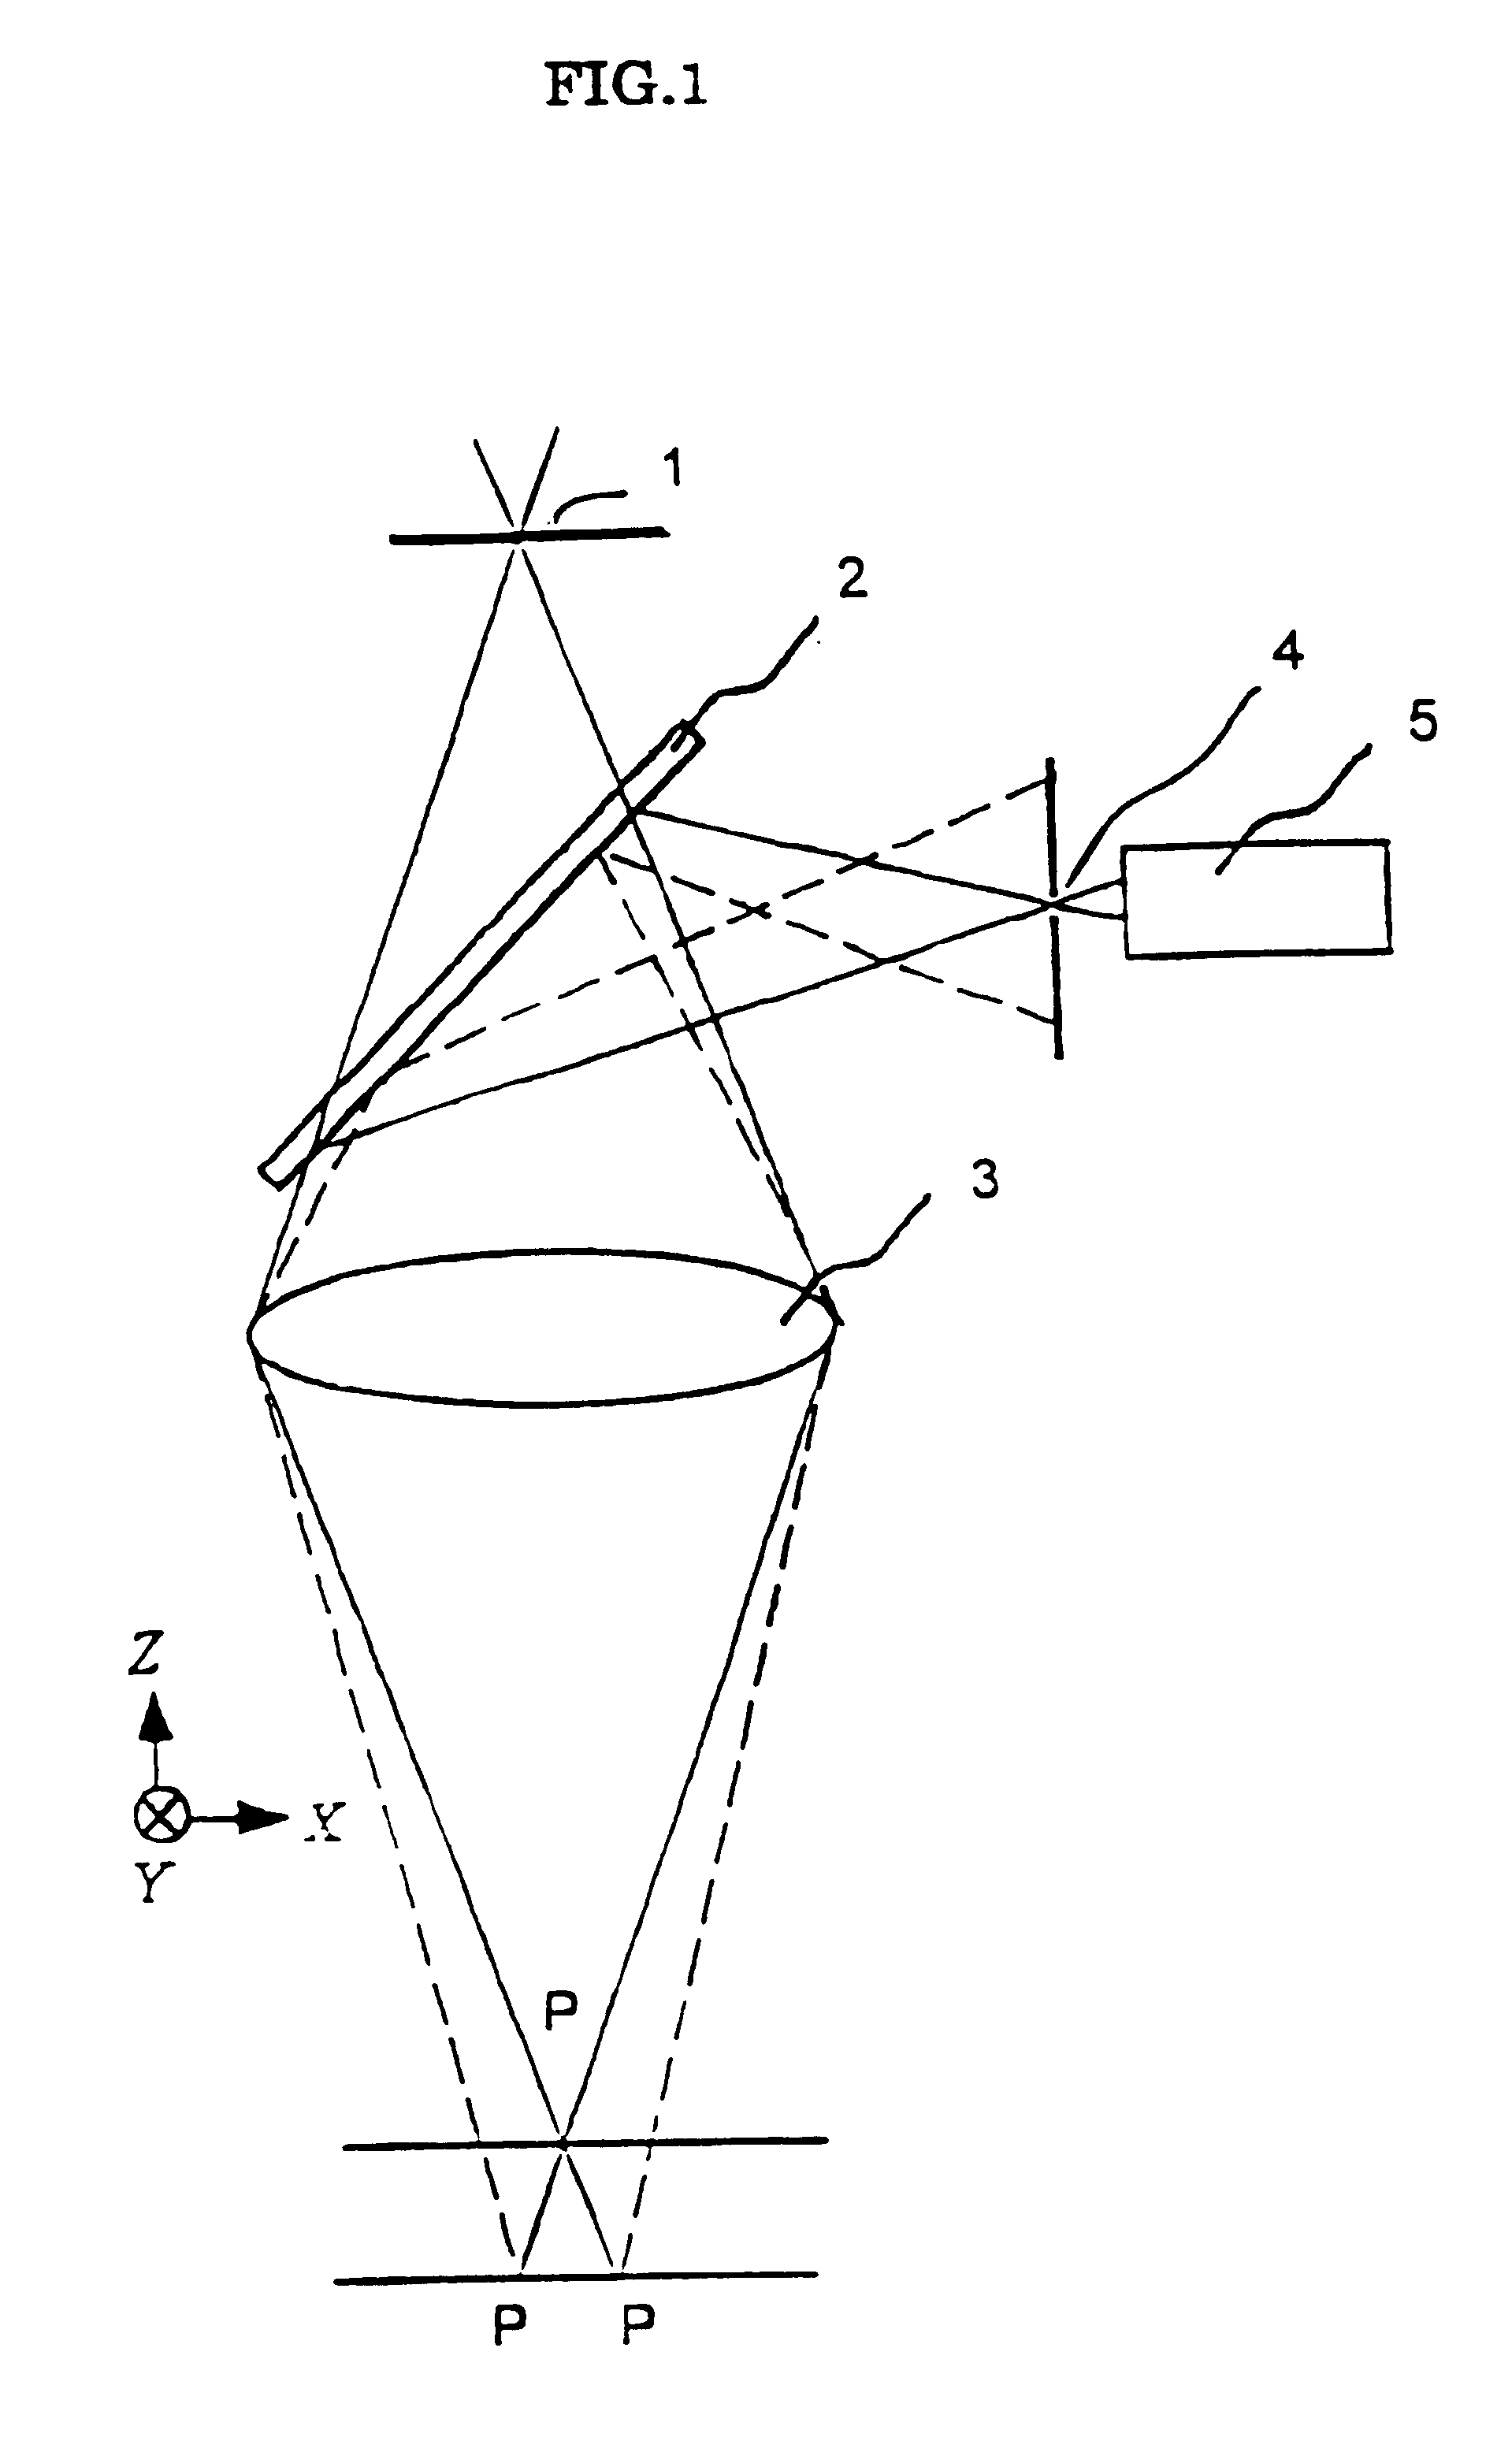 Three-dimensional shape measuring apparatus